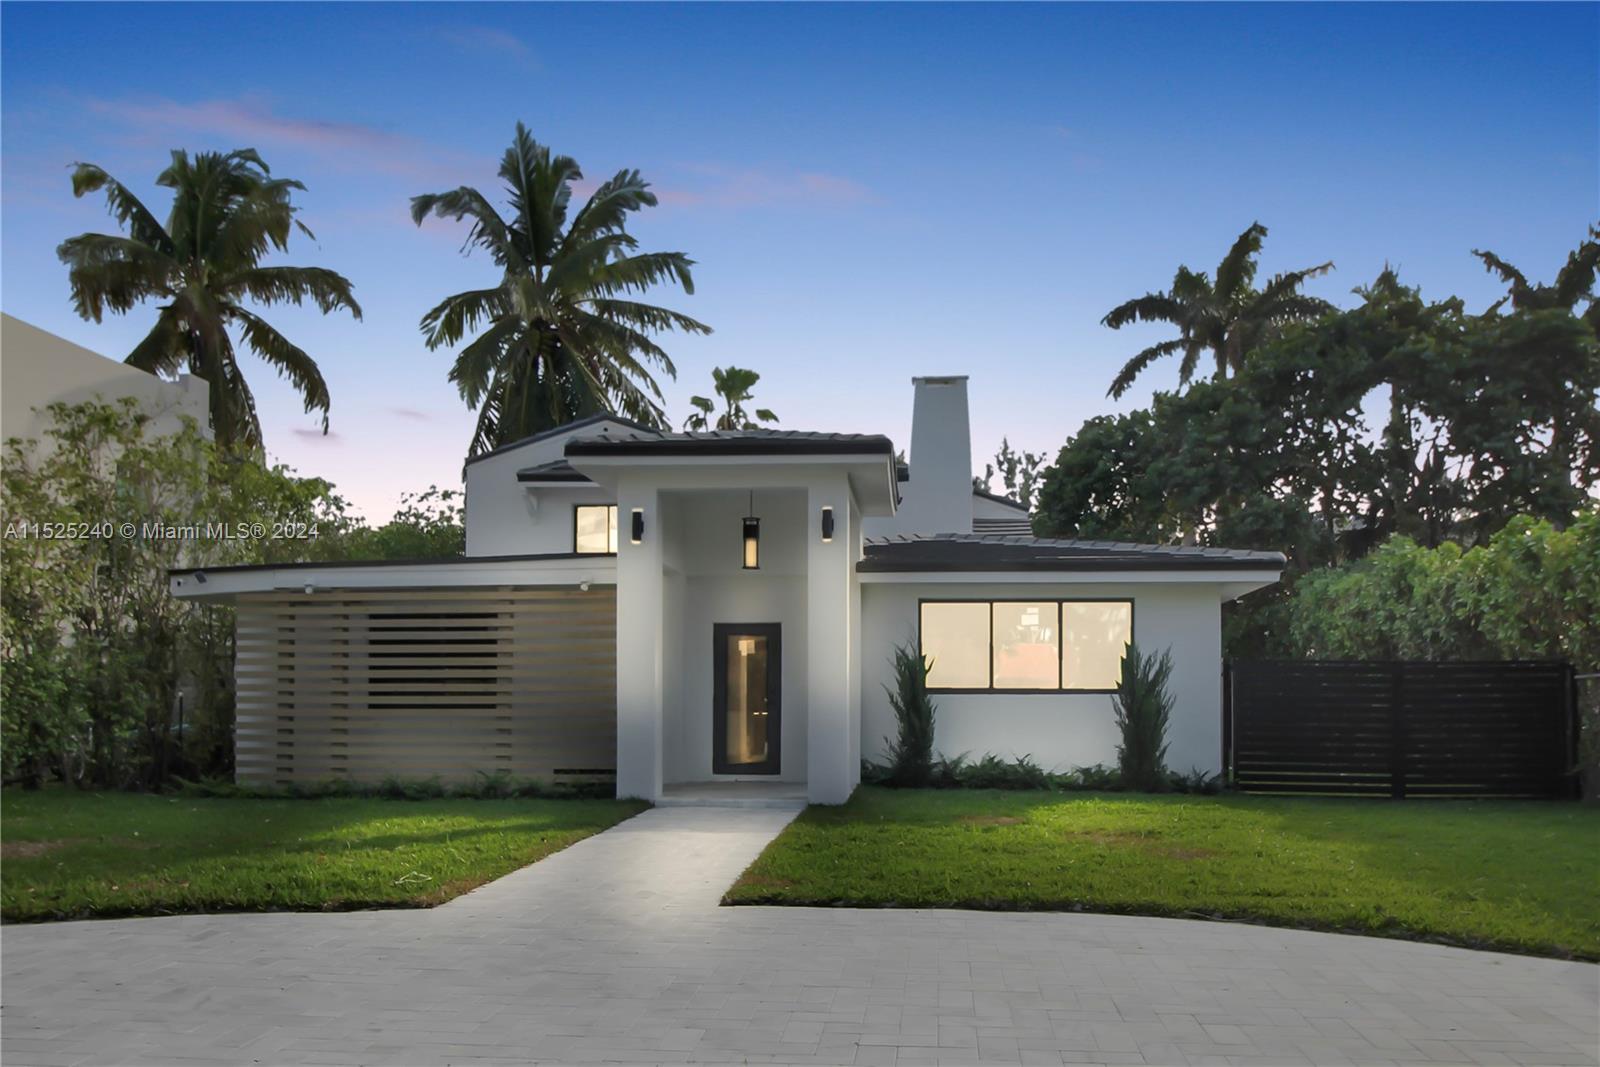 Rental Property at 888 W 47th Street, Miami Beach, Miami-Dade County, Florida - Bedrooms: 4 
Bathrooms: 4  - $13,500 MO.